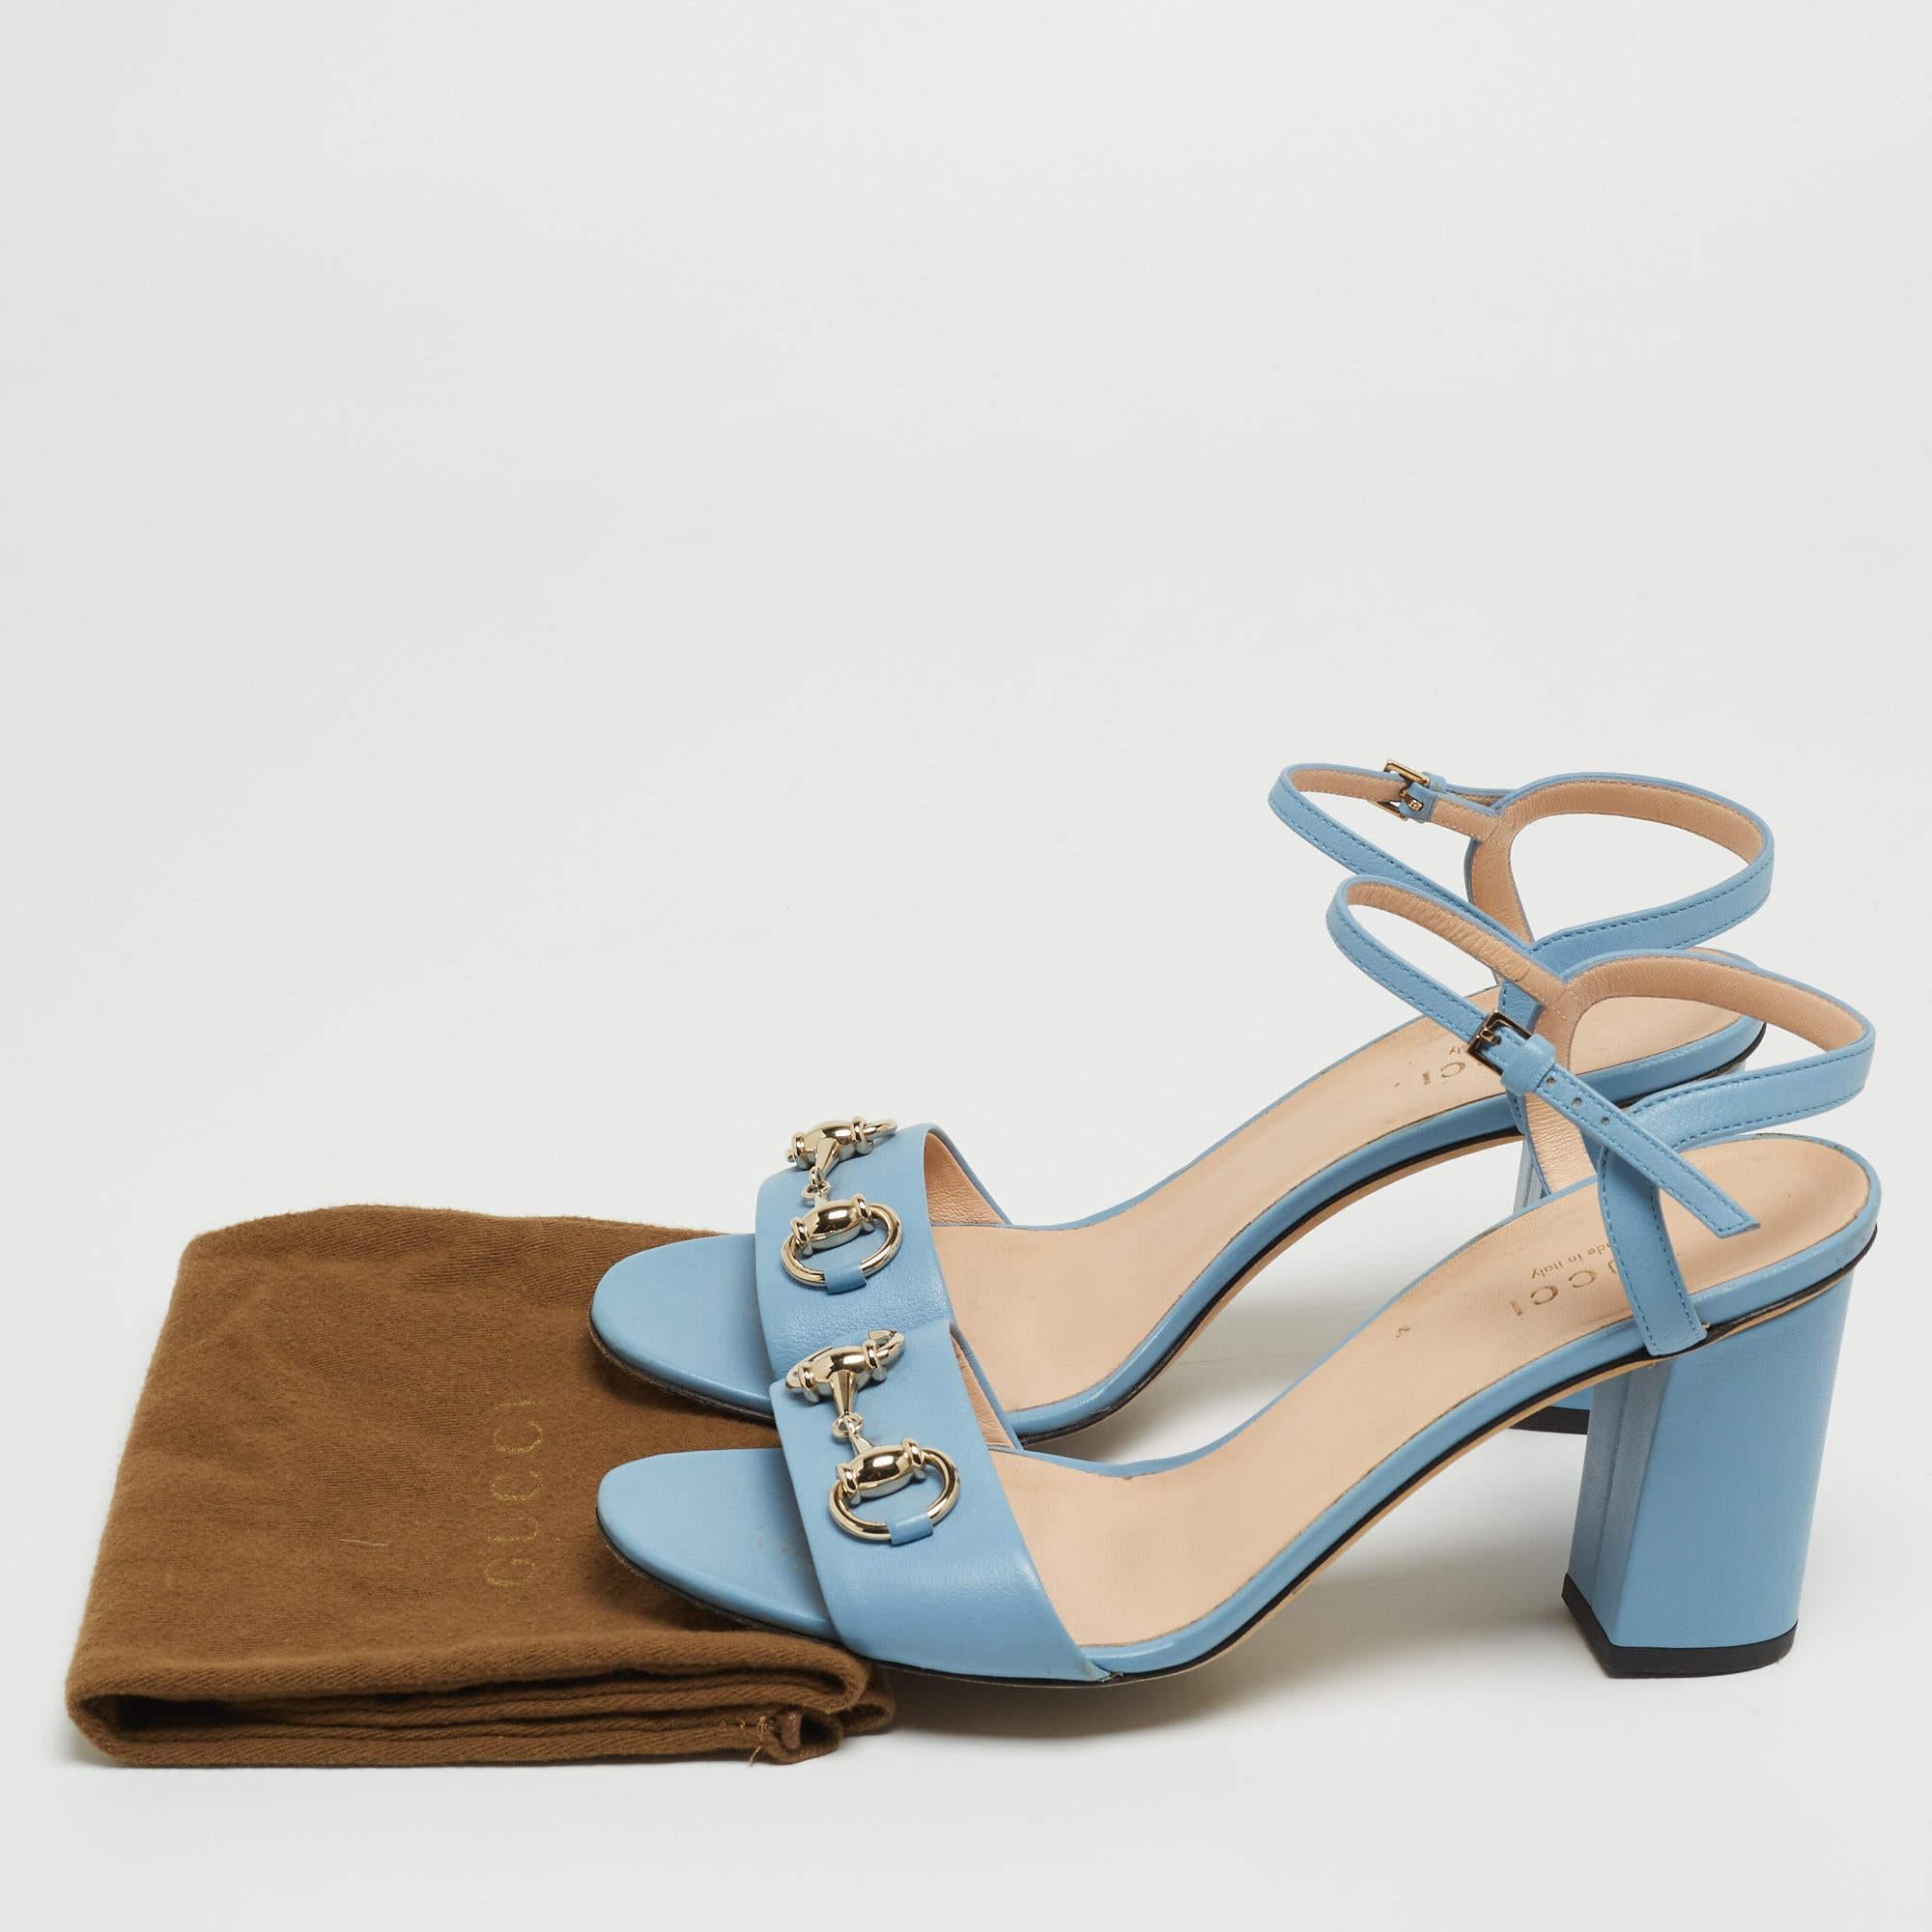 Gucci Blue Leather Horsebit Ankle Strap Sandals Size 37.5 5